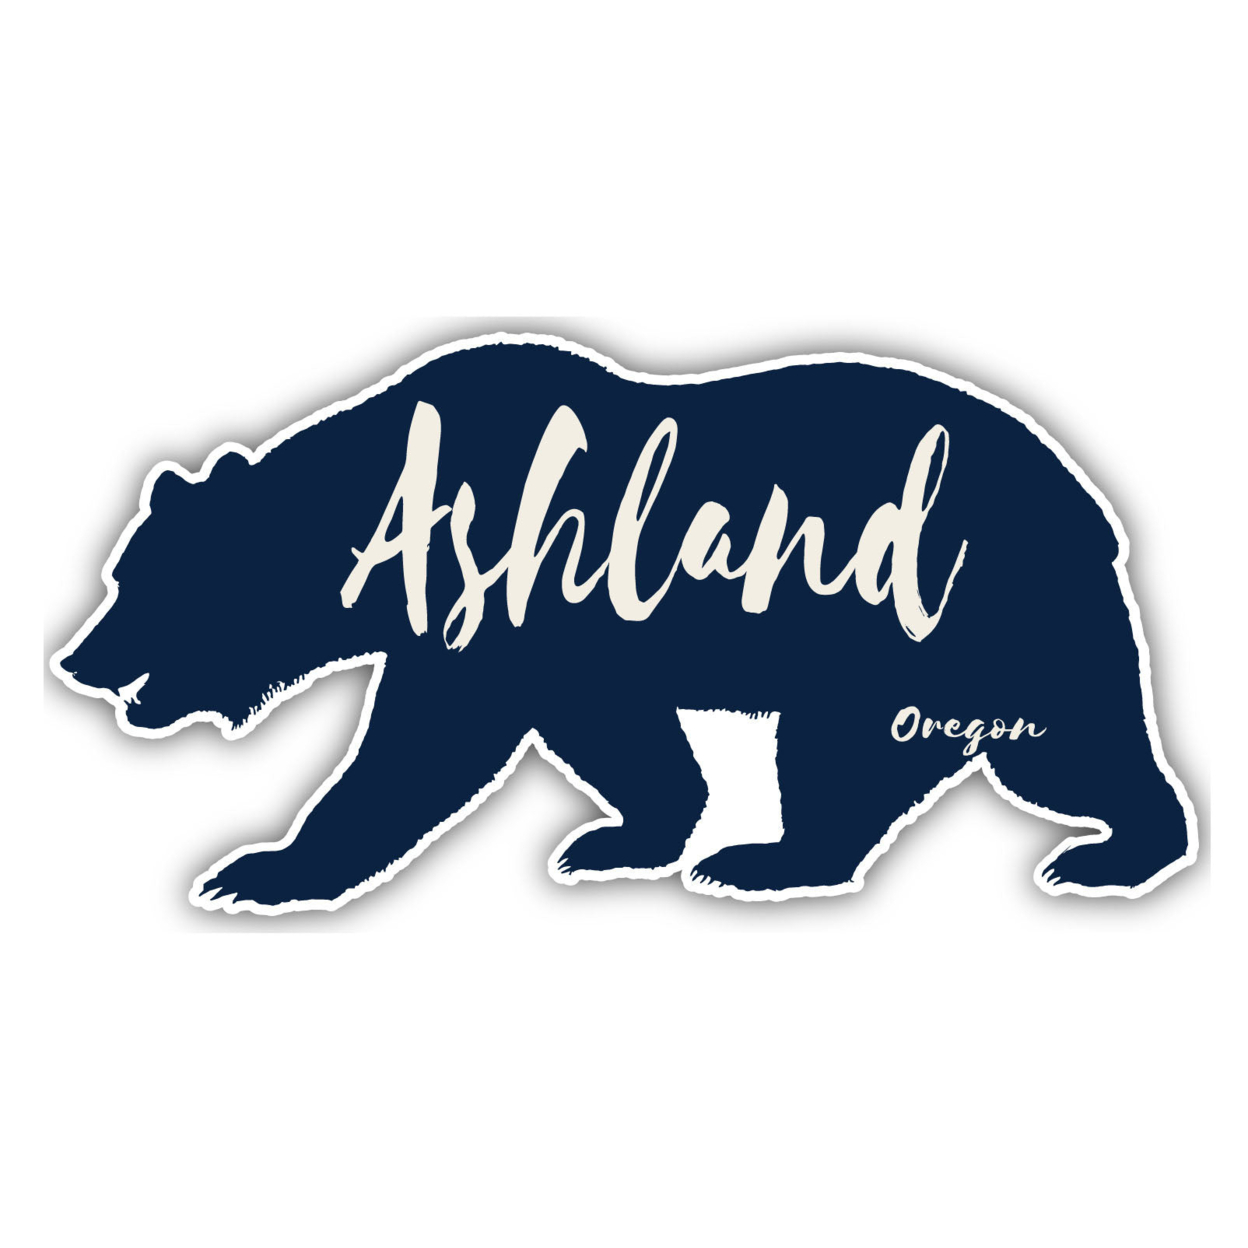 Ashland Oregon Souvenir Decorative Stickers (Choose Theme And Size) - Single Unit, 2-Inch, Tent